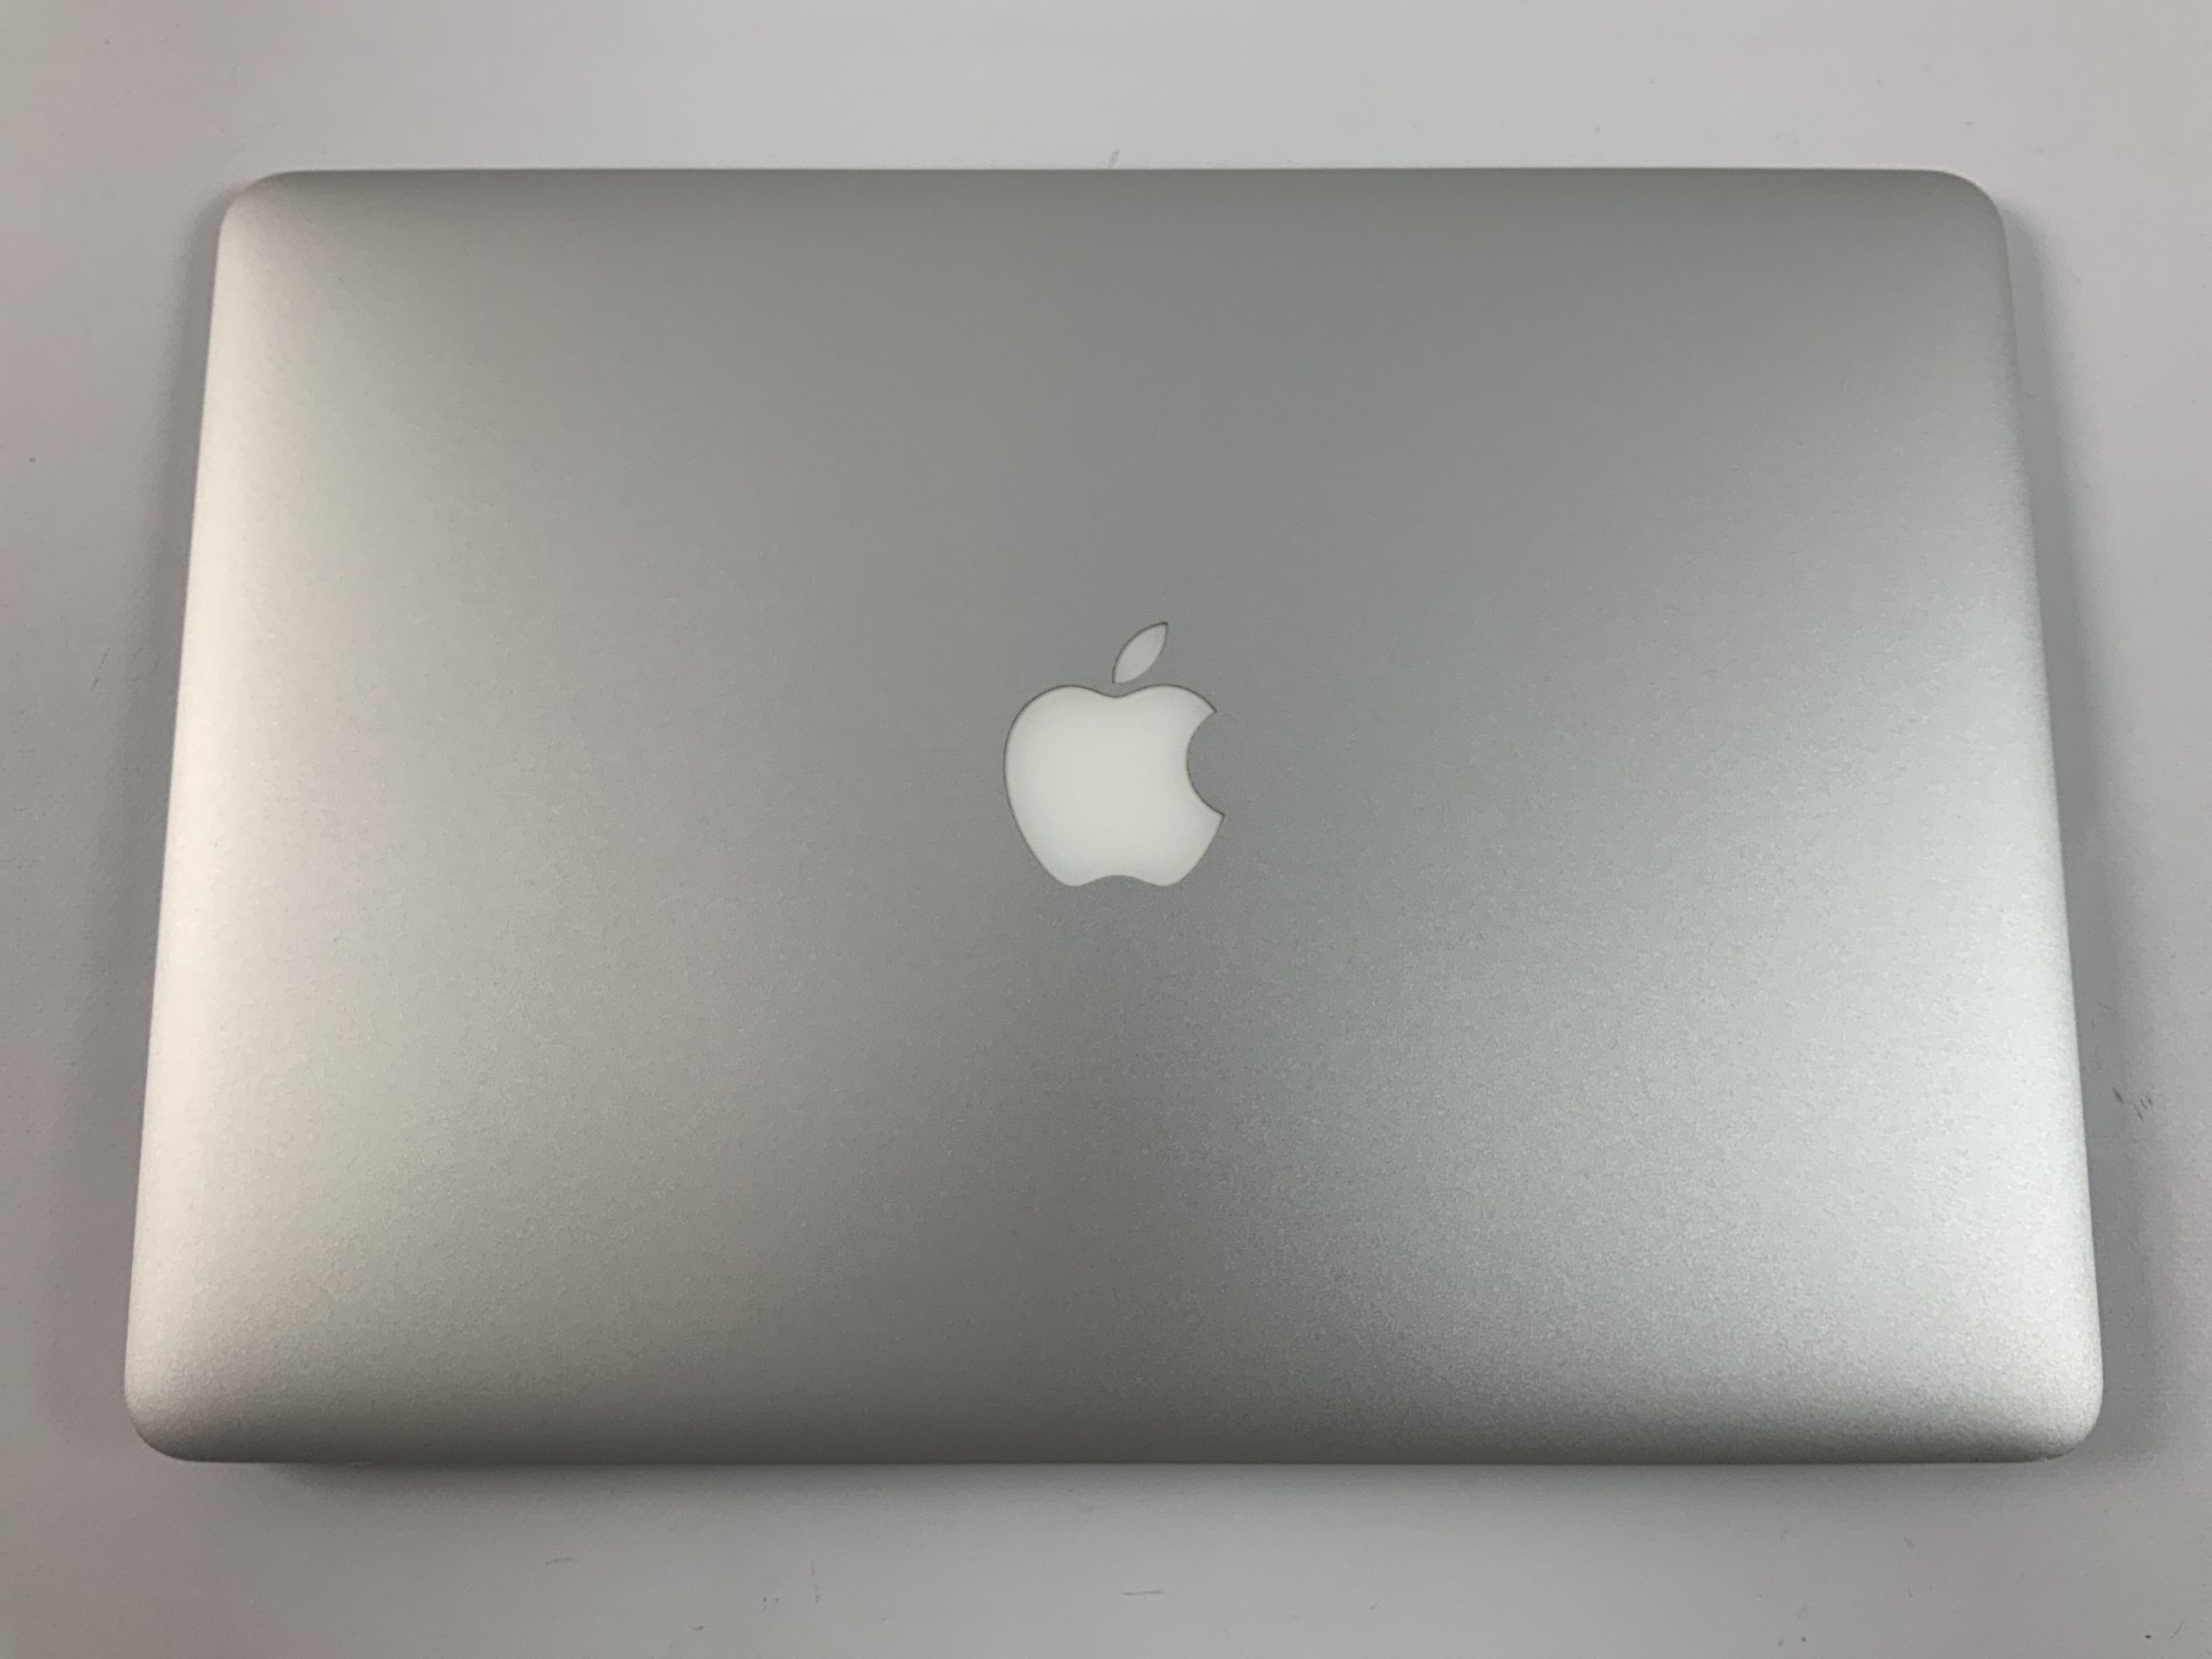 MacBook Air 13" Early 2015 (Intel Core i5 1.6 GHz 4 GB RAM 128 GB SSD), Intel Core i5 1.6 GHz, 4 GB RAM, 128 GB SSD, Afbeelding 3